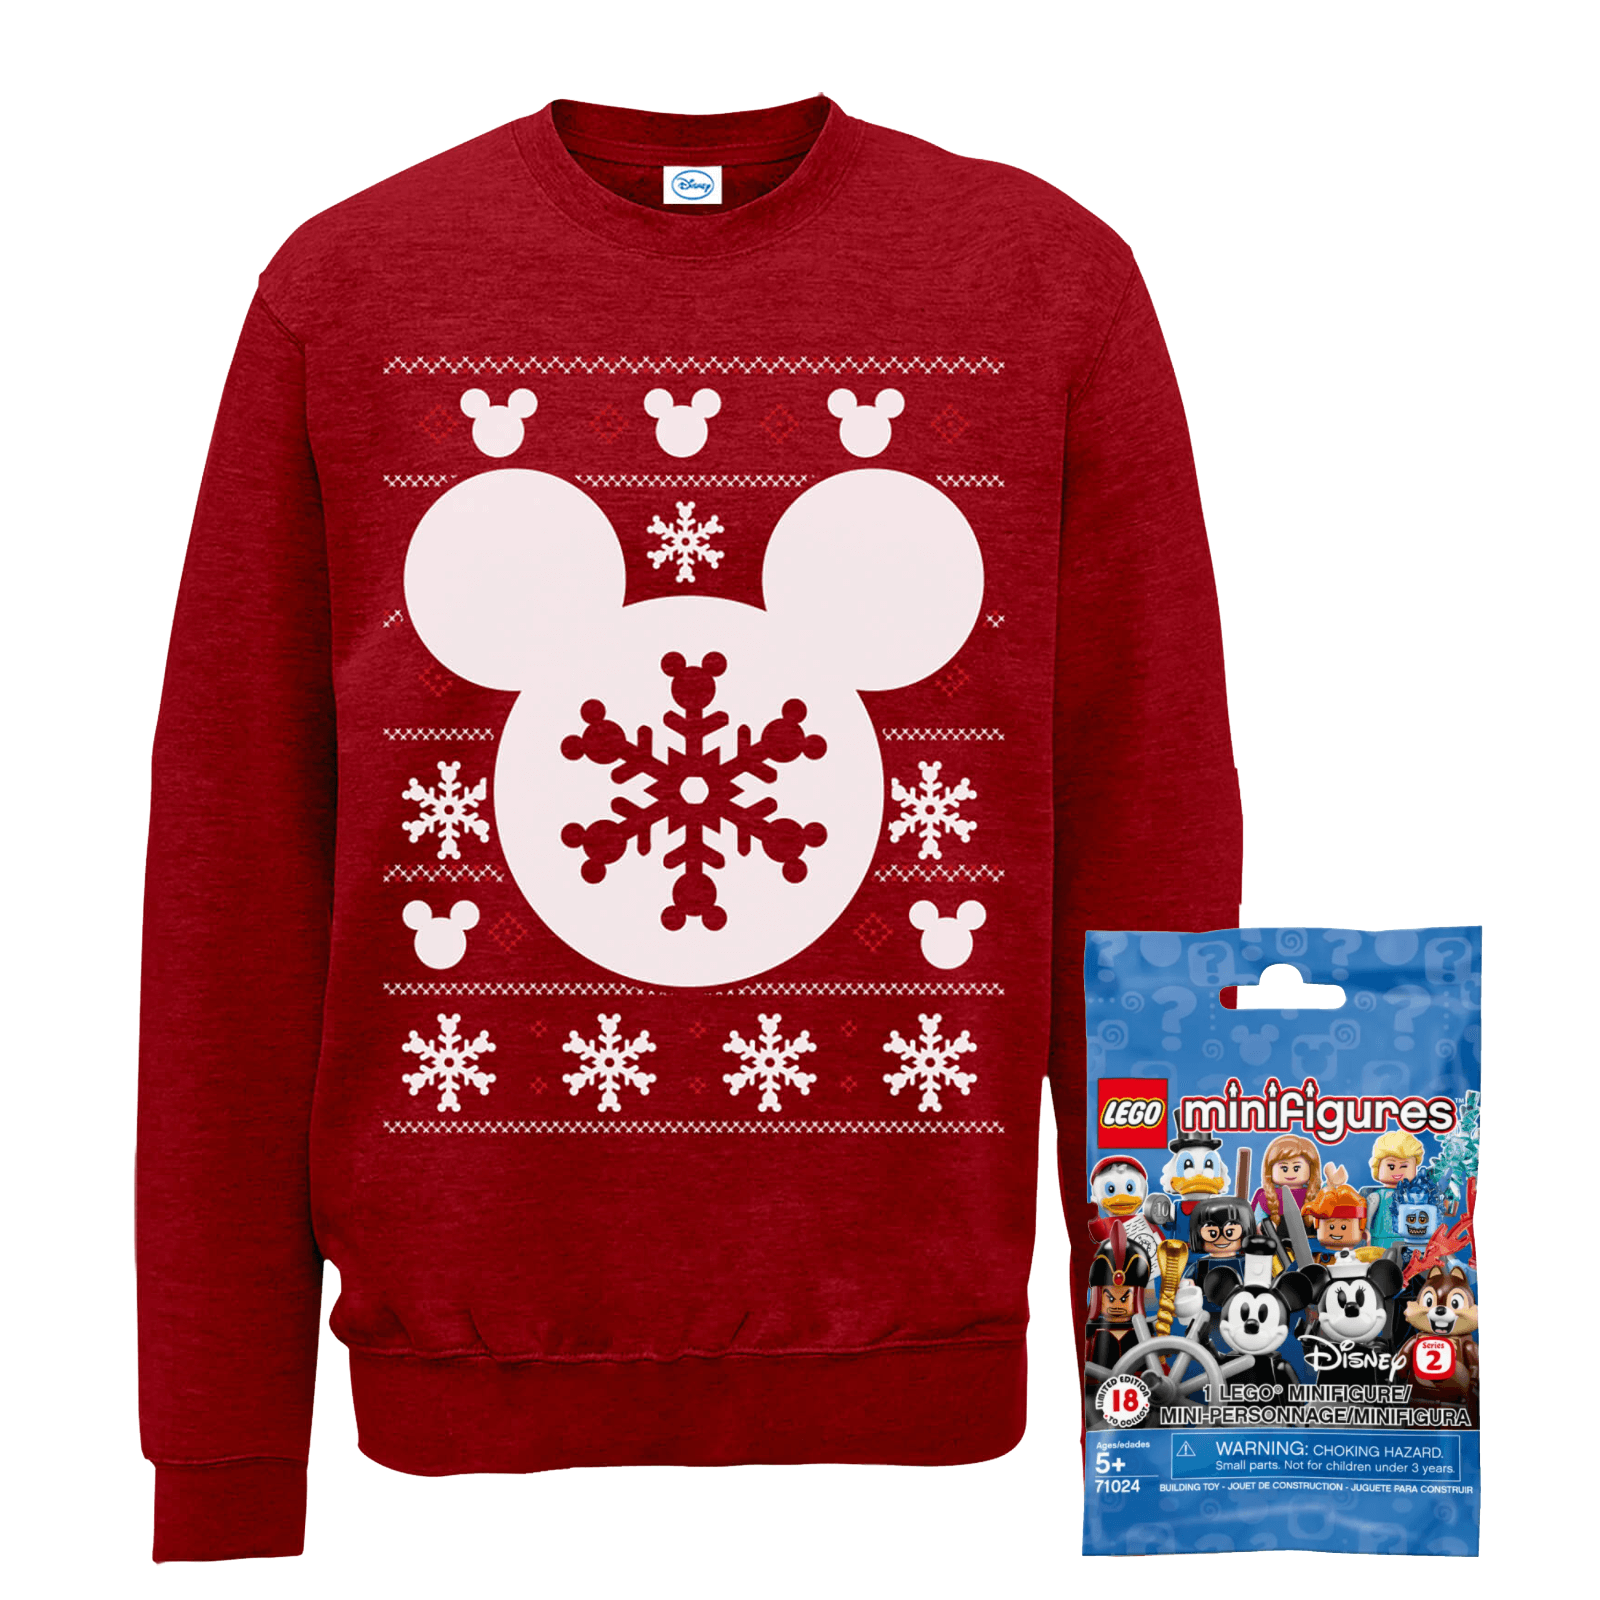 Disney Christmas Sweatshirt & Lego Minifigure Bundle - Unisex - M von Disney